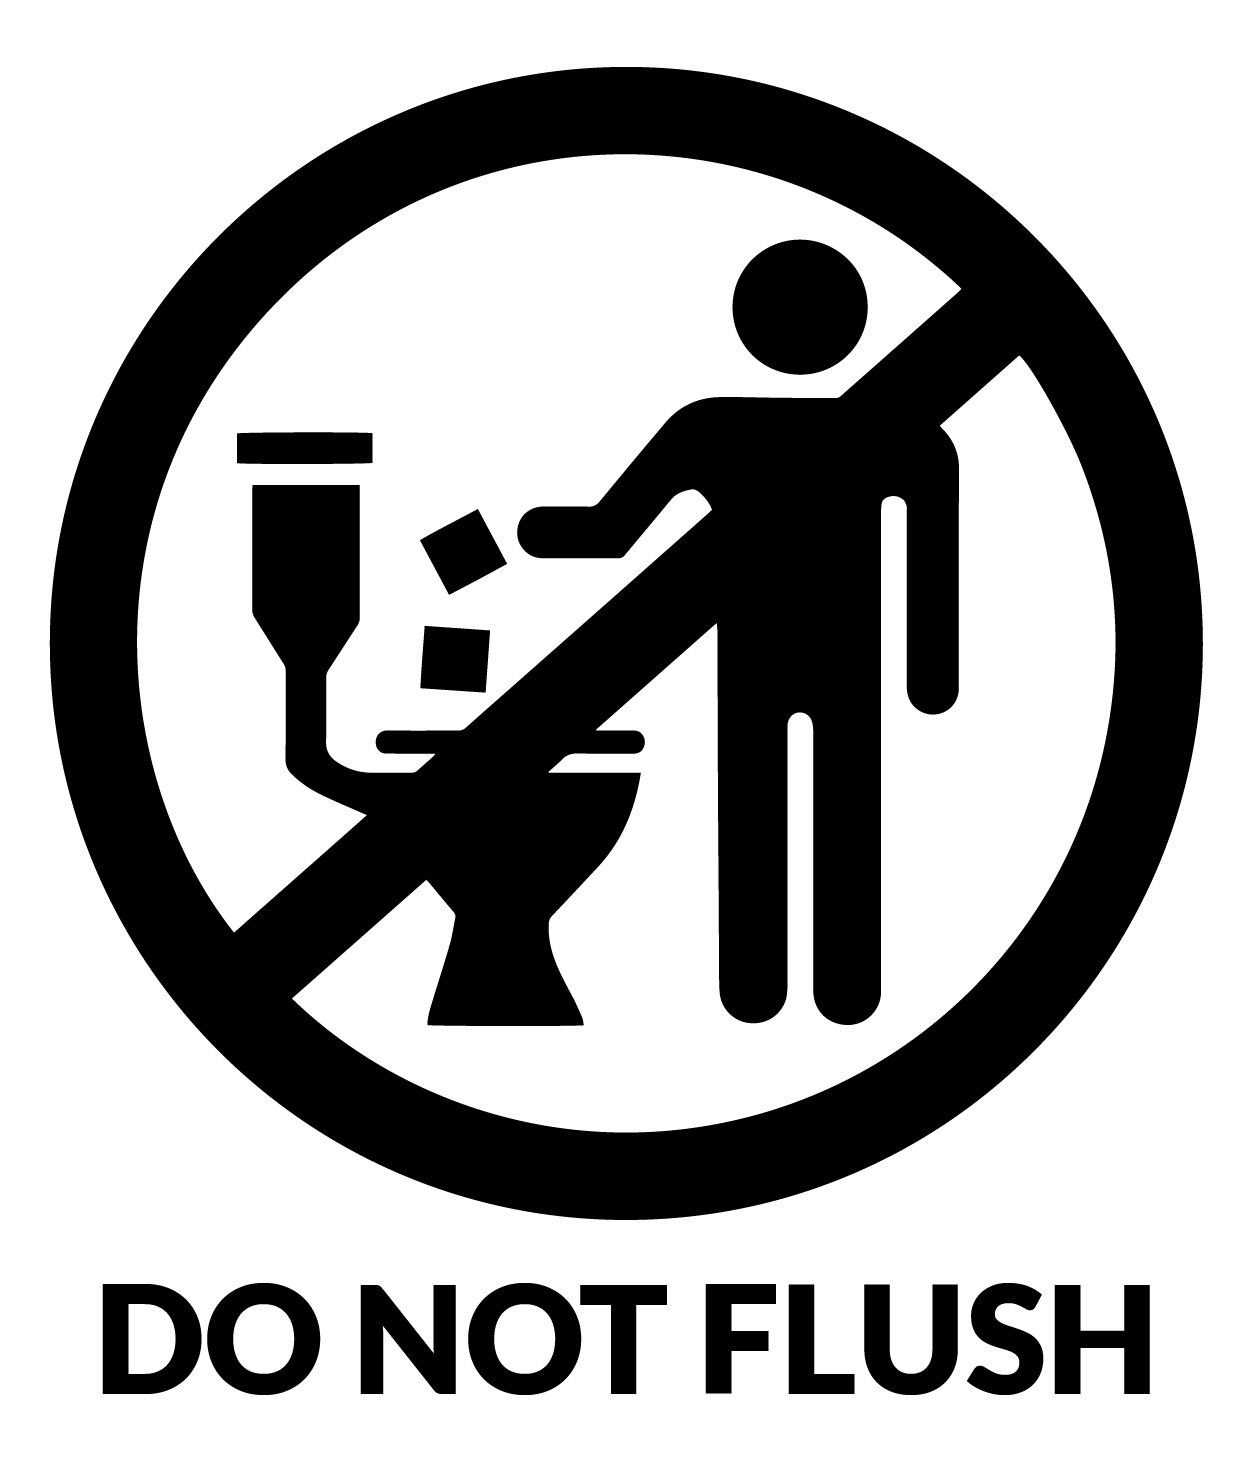 Copy of Do not flush 01 1